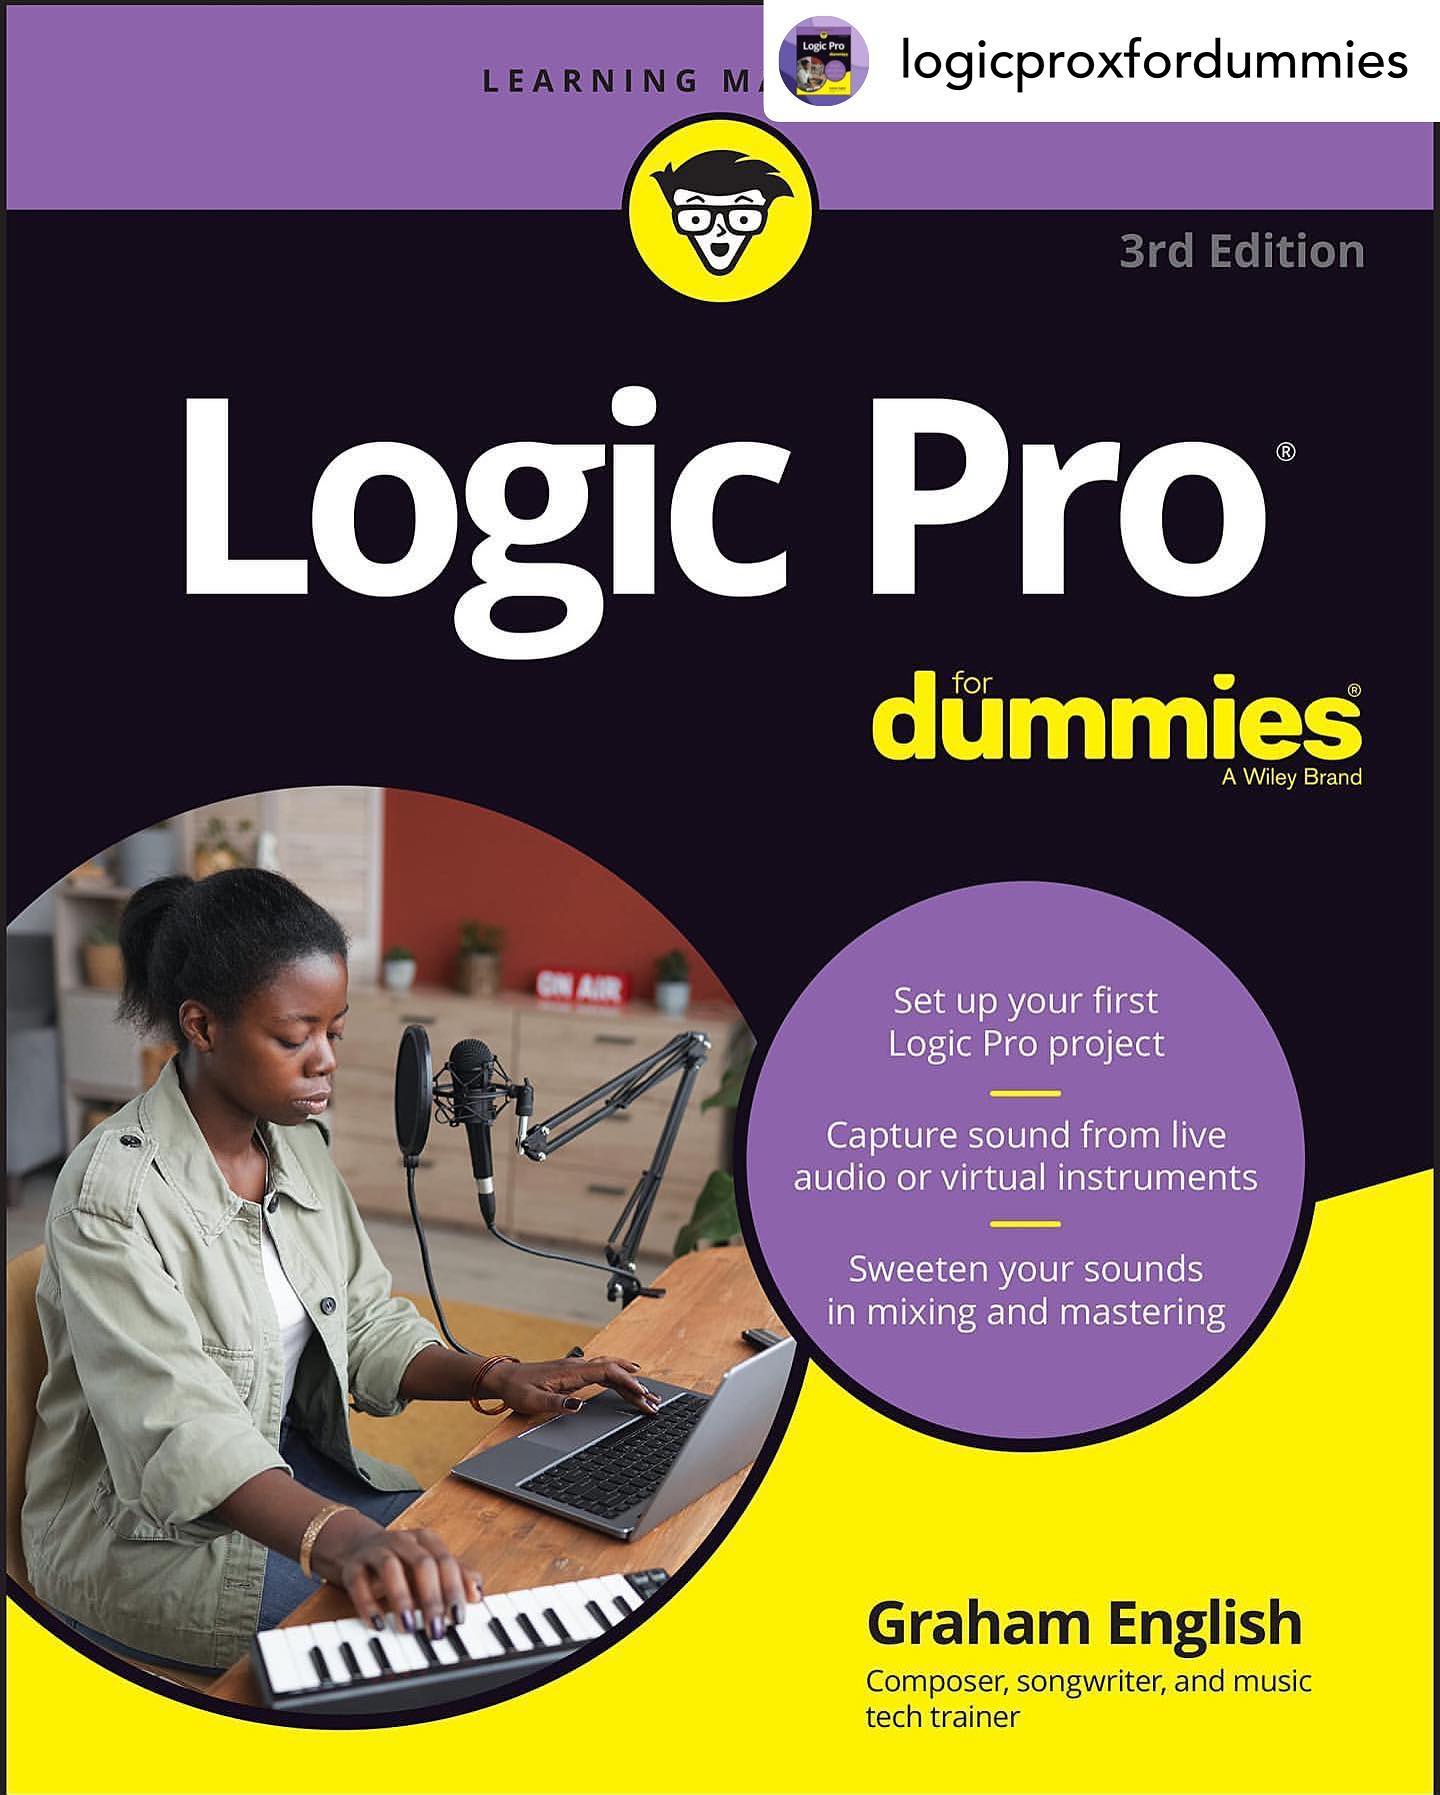 Logic Pro For Dummies Pre-Order Alert